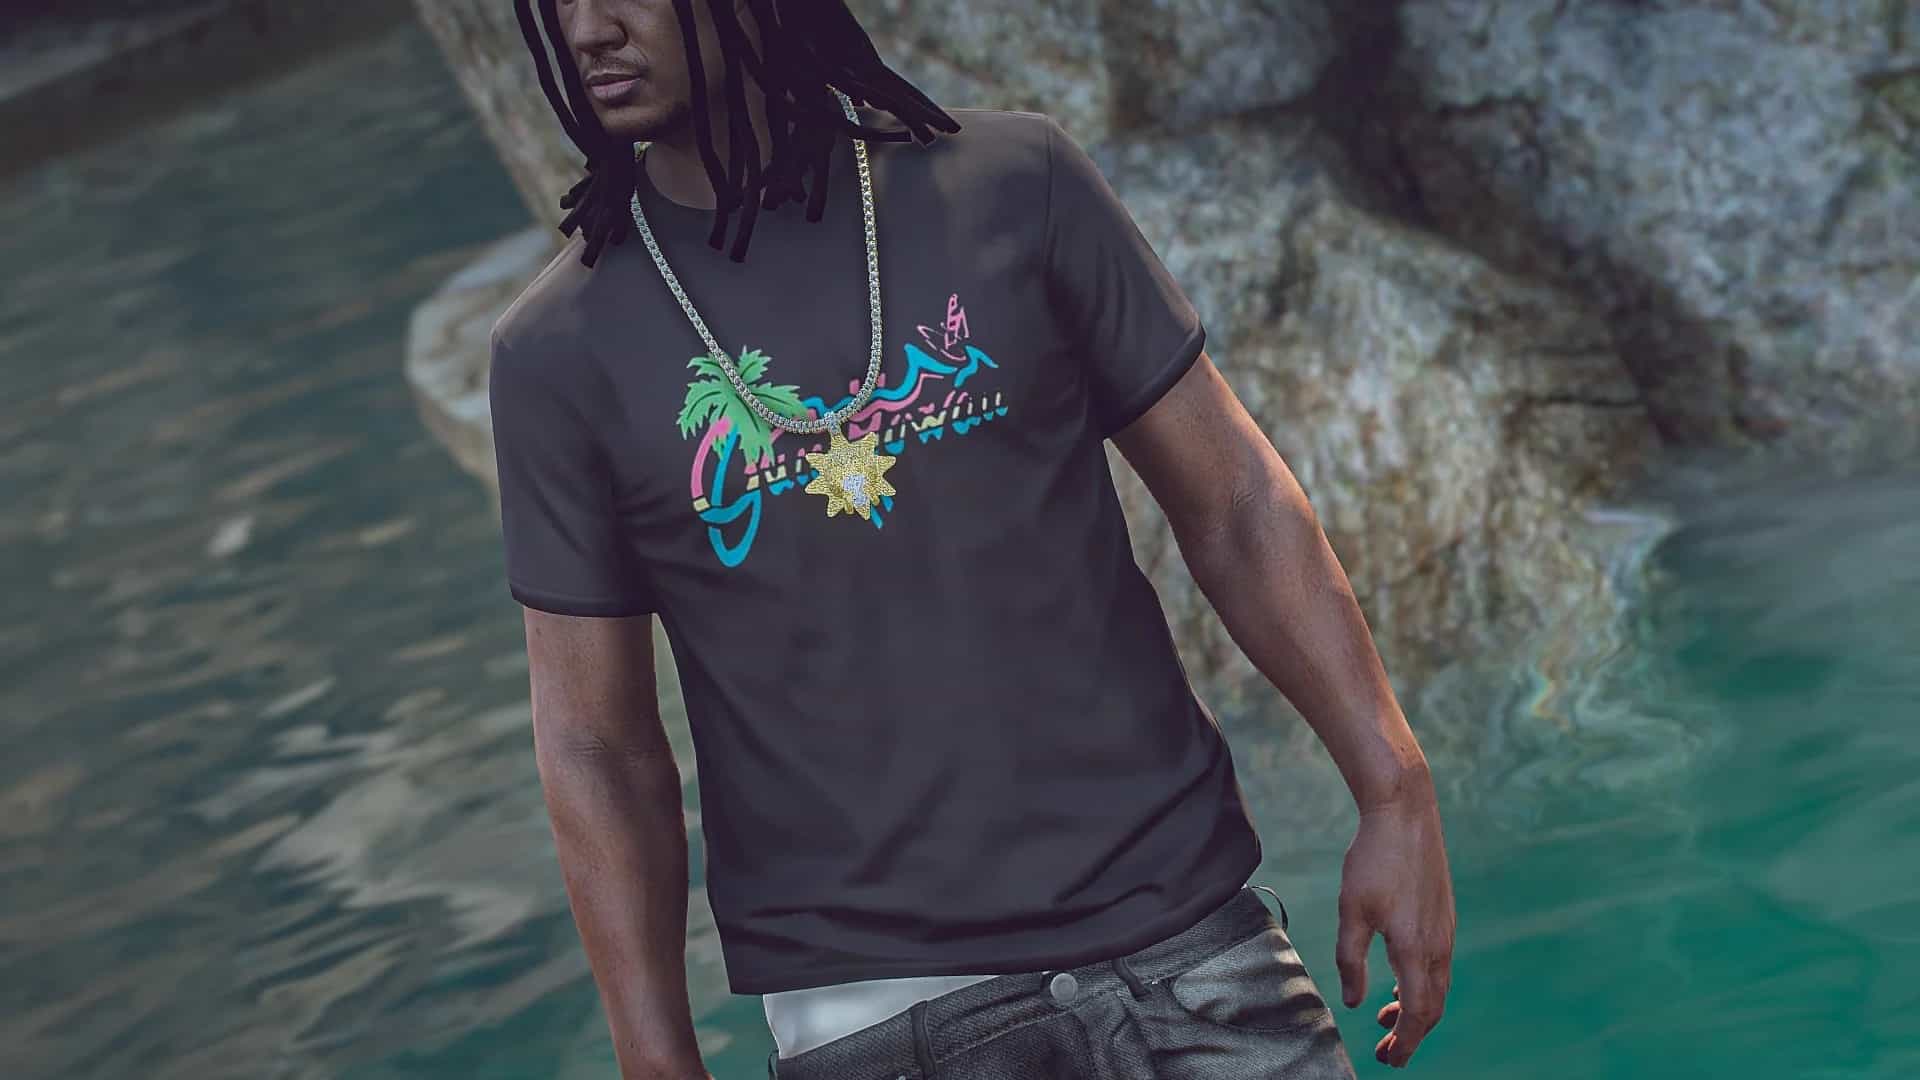 Gucci shirts for mp male(fivem ready) 1.0 - GTA 5 Mod | Grand Theft ...